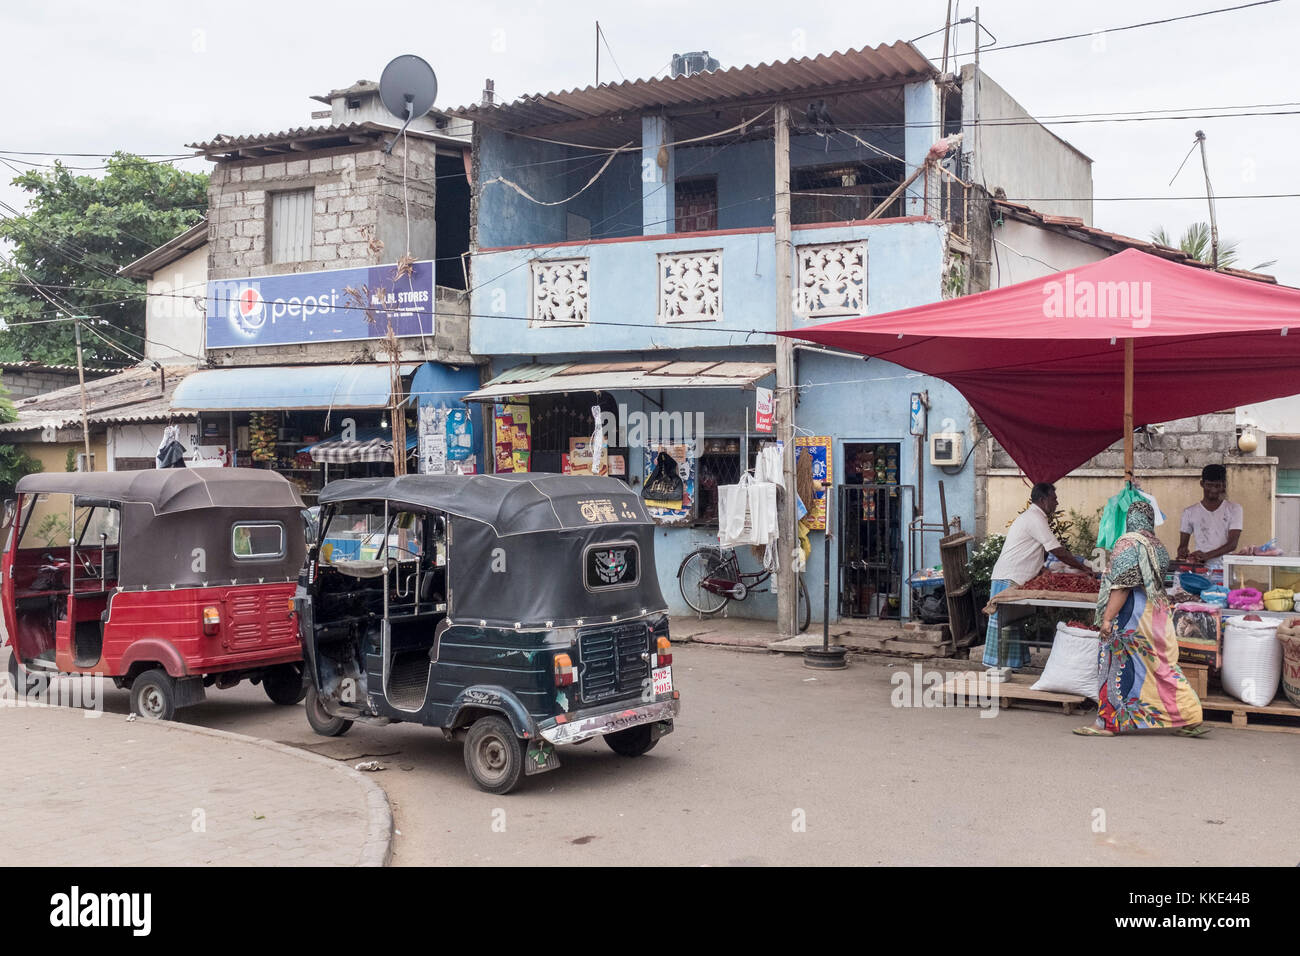 A view of a market in Negombo, Sri Lanka Stock Photo